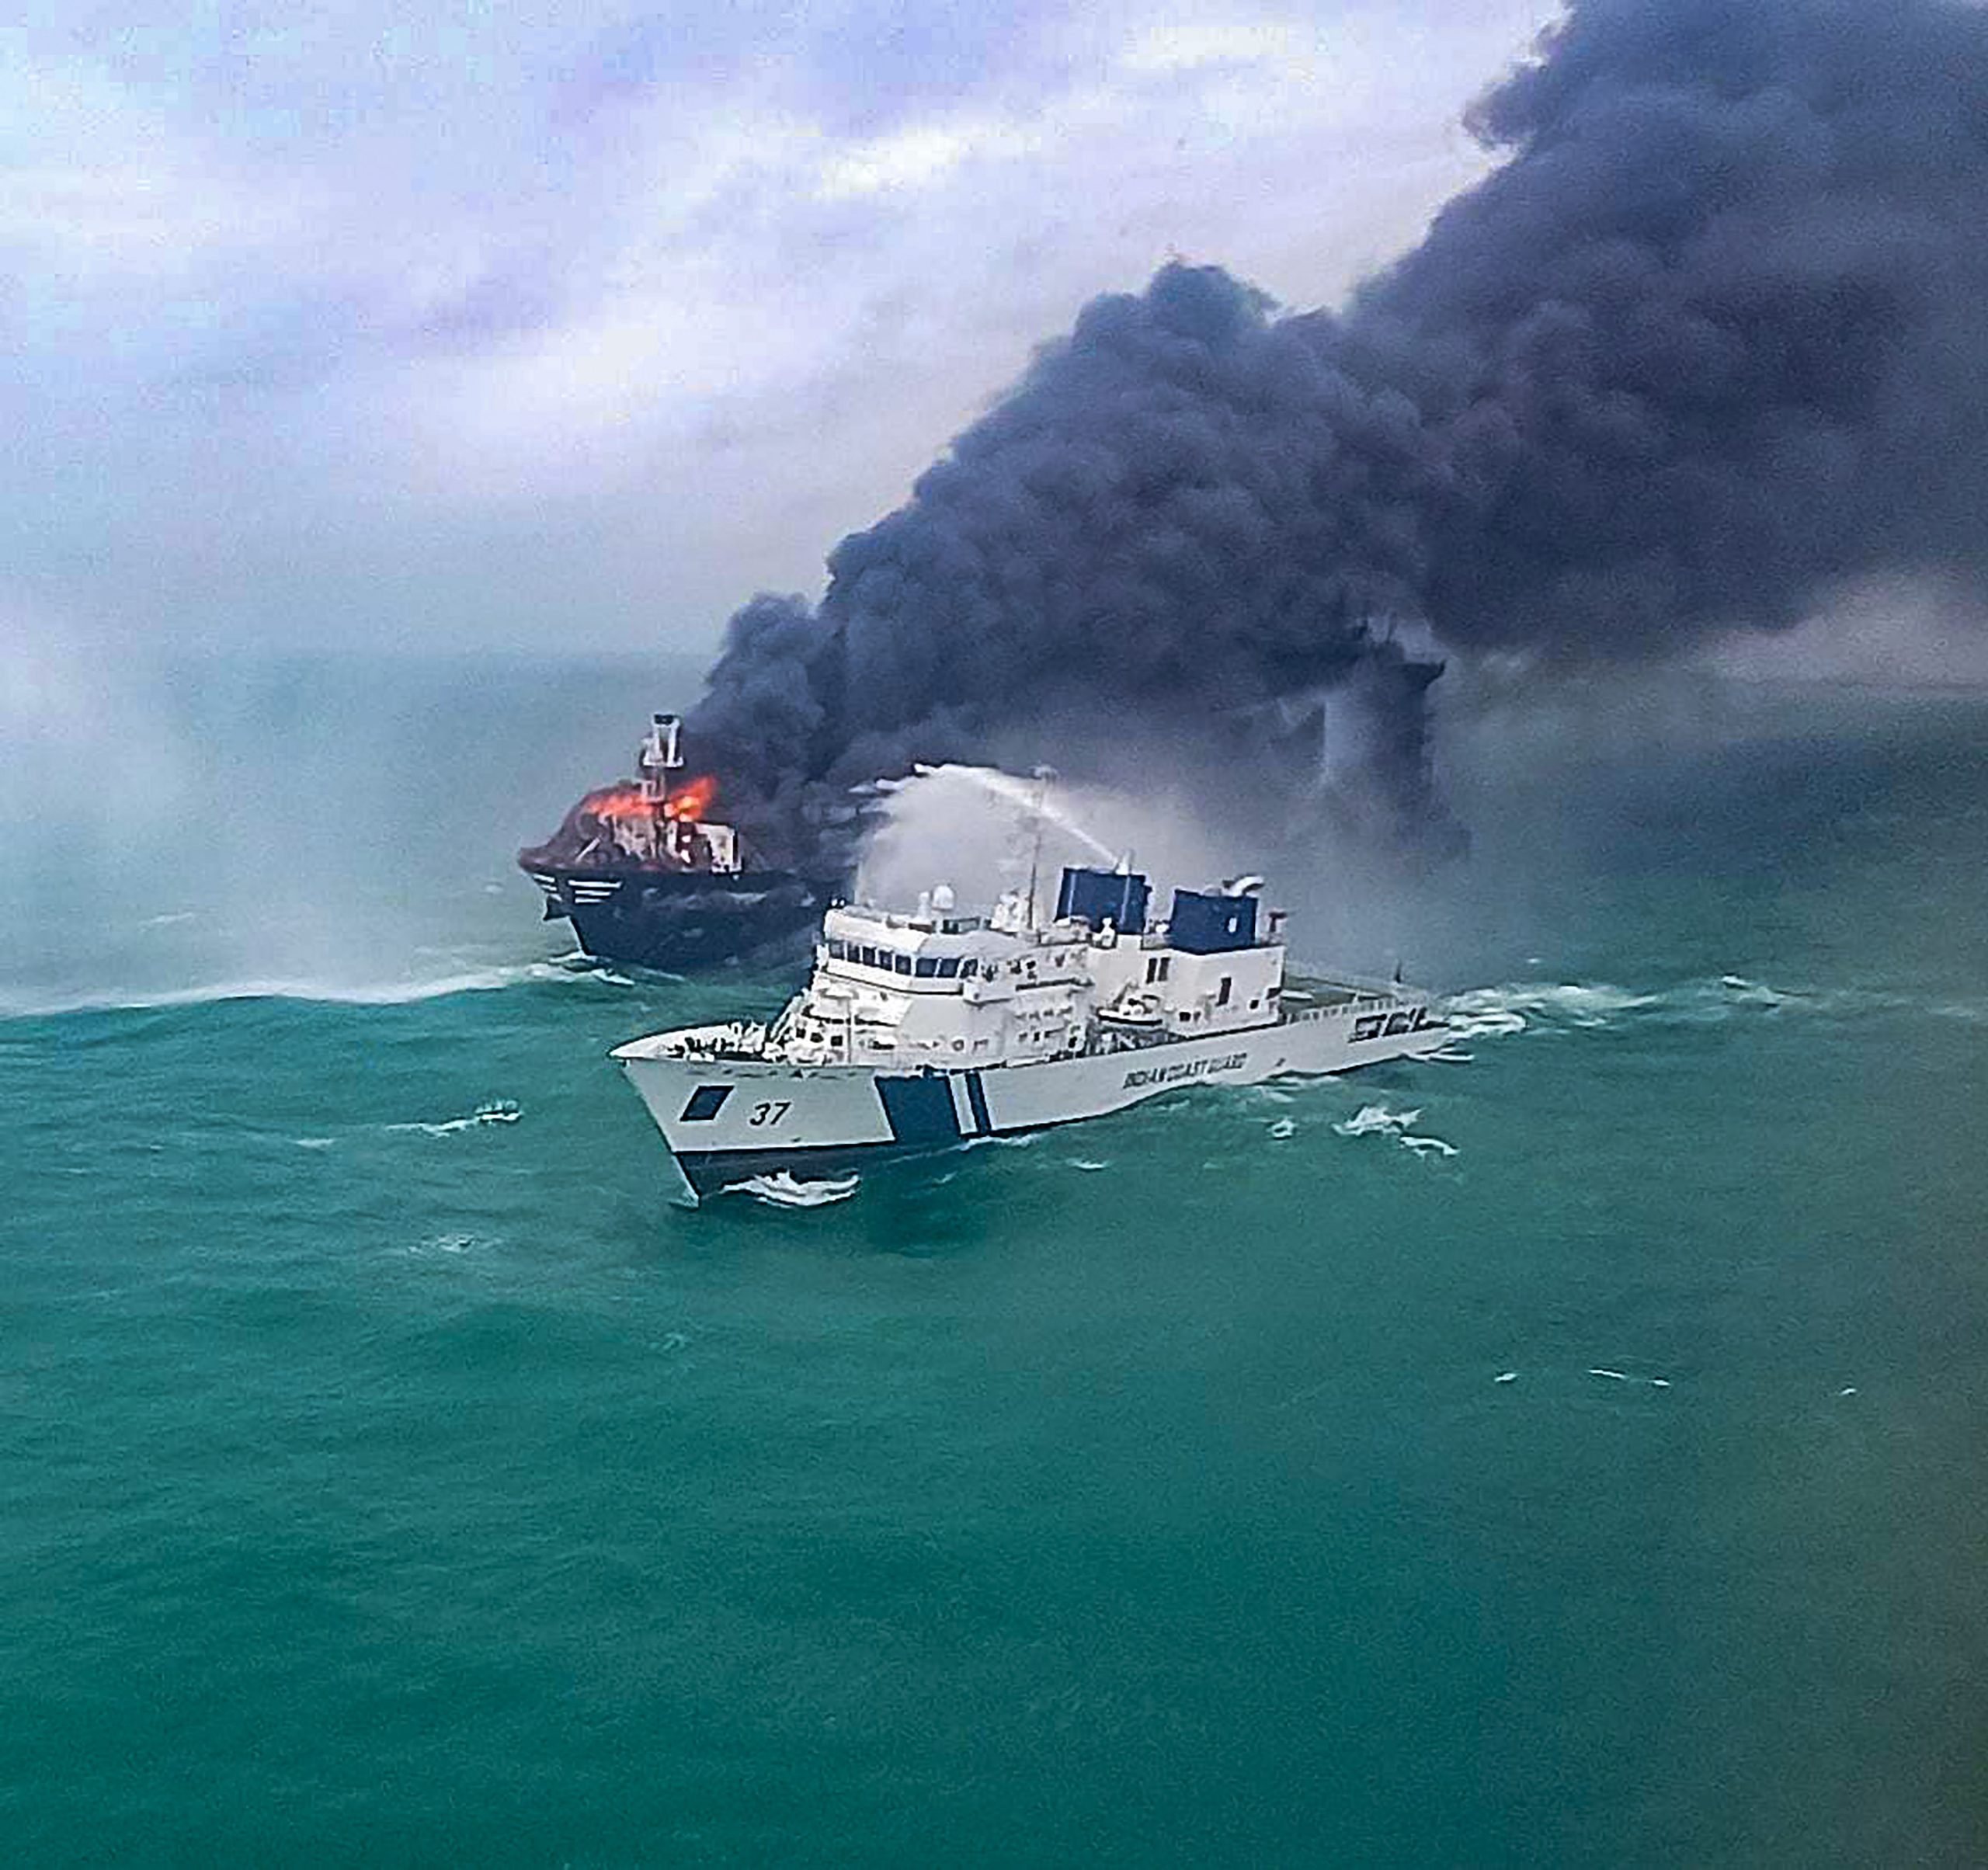 Sri Lanka facing marine disaster from burning ship: Official